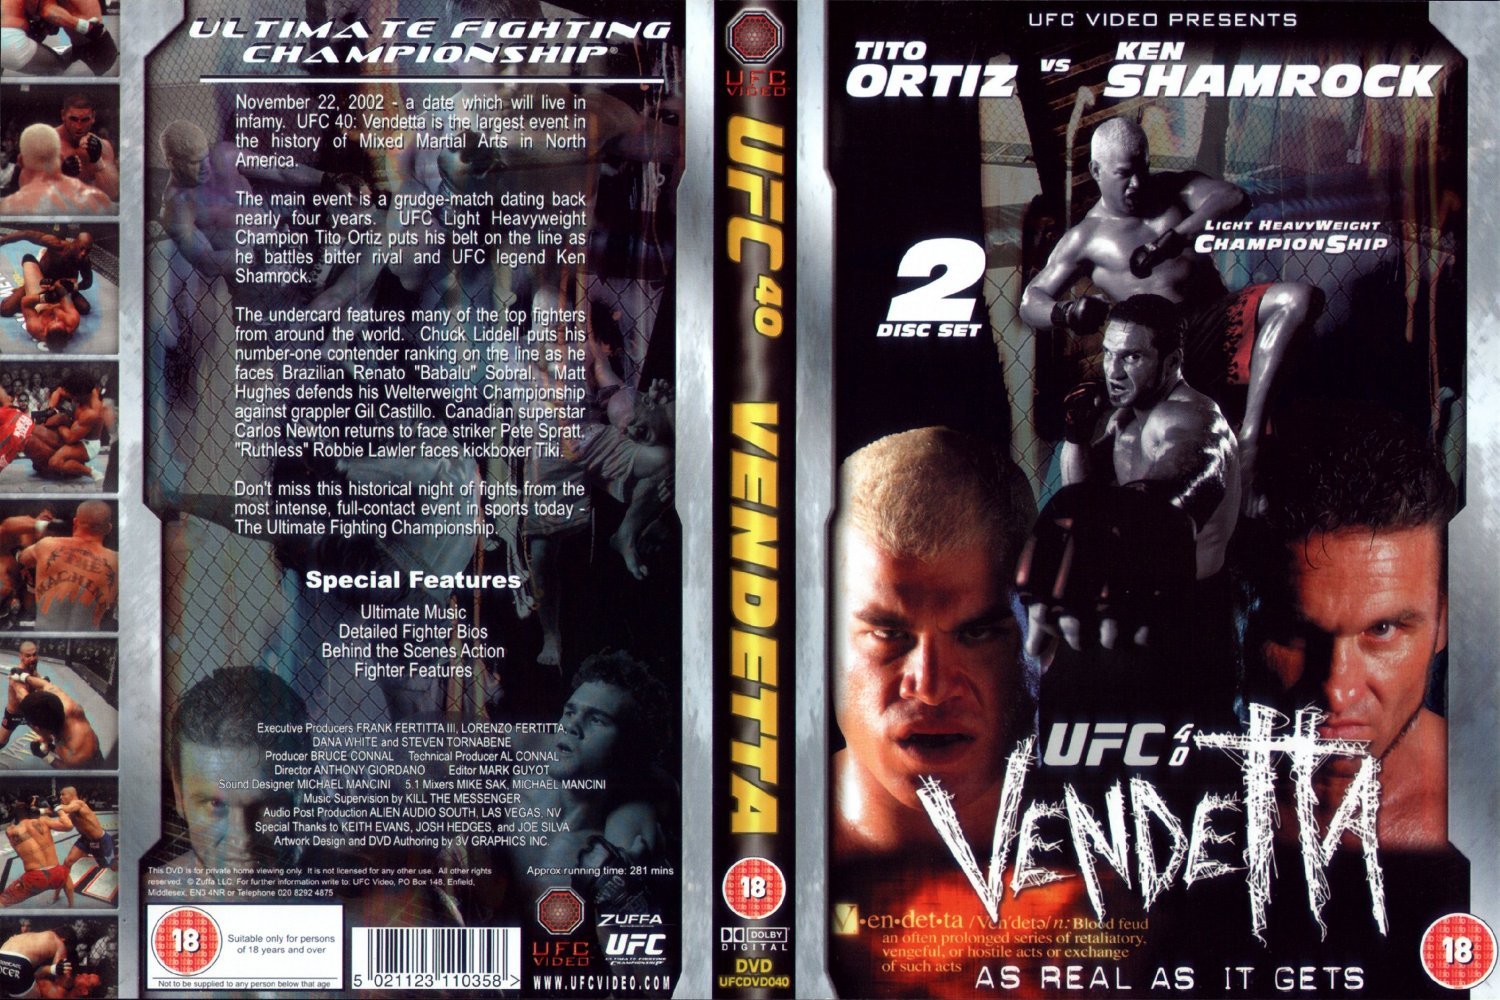 Jaquette DVD Ufc 40 Vendetta